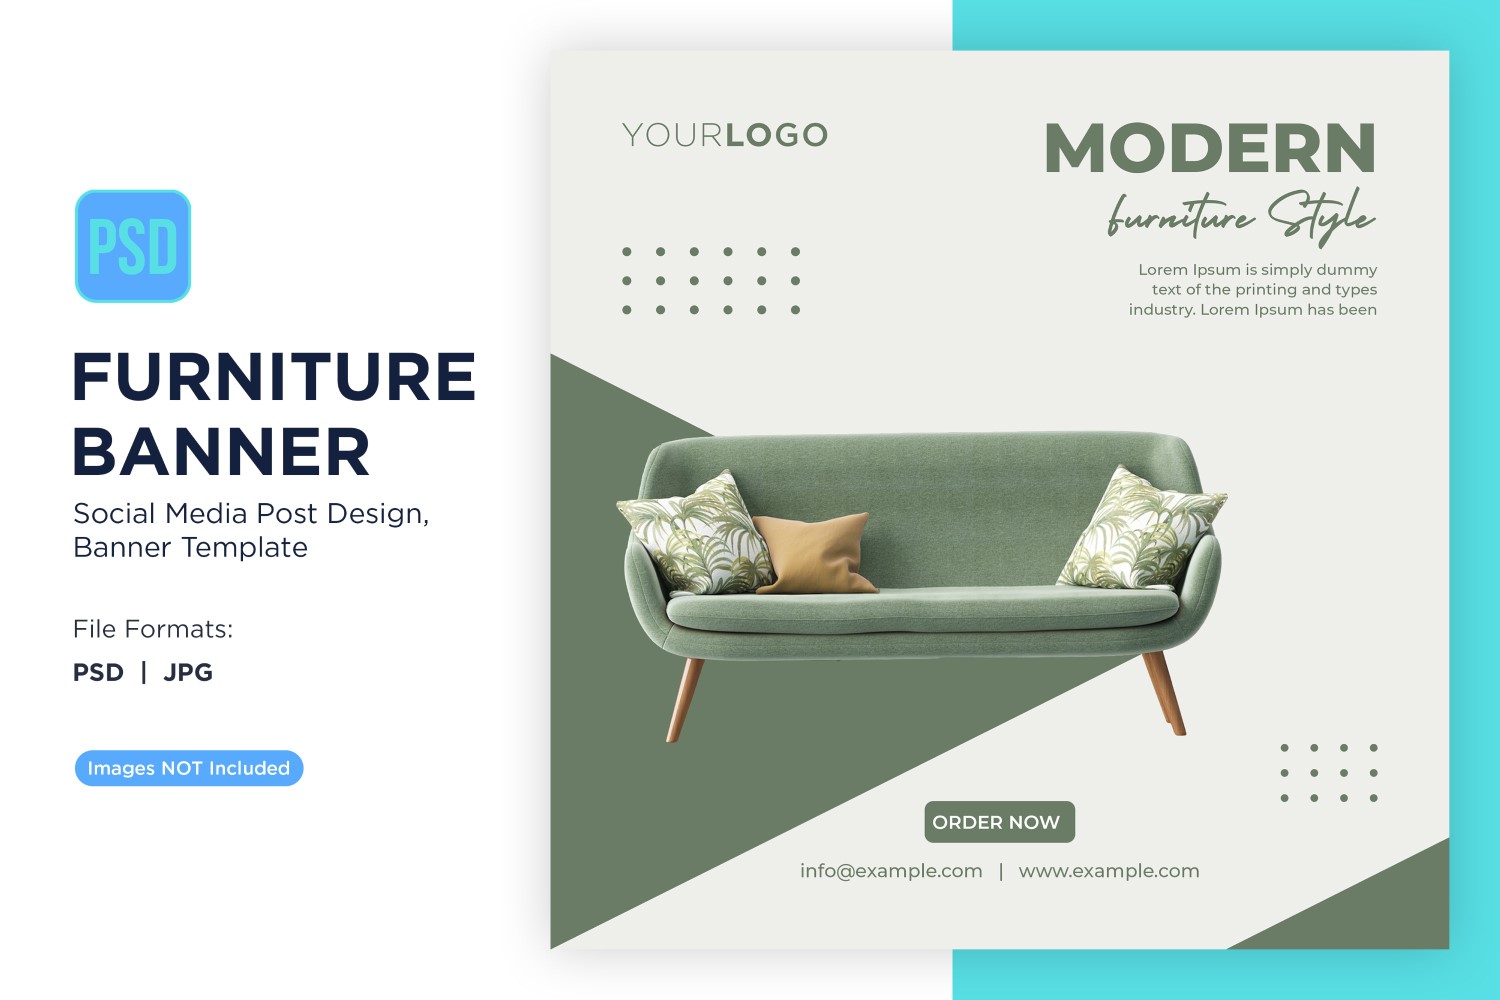 Modern Furniture Style Banner Design Template